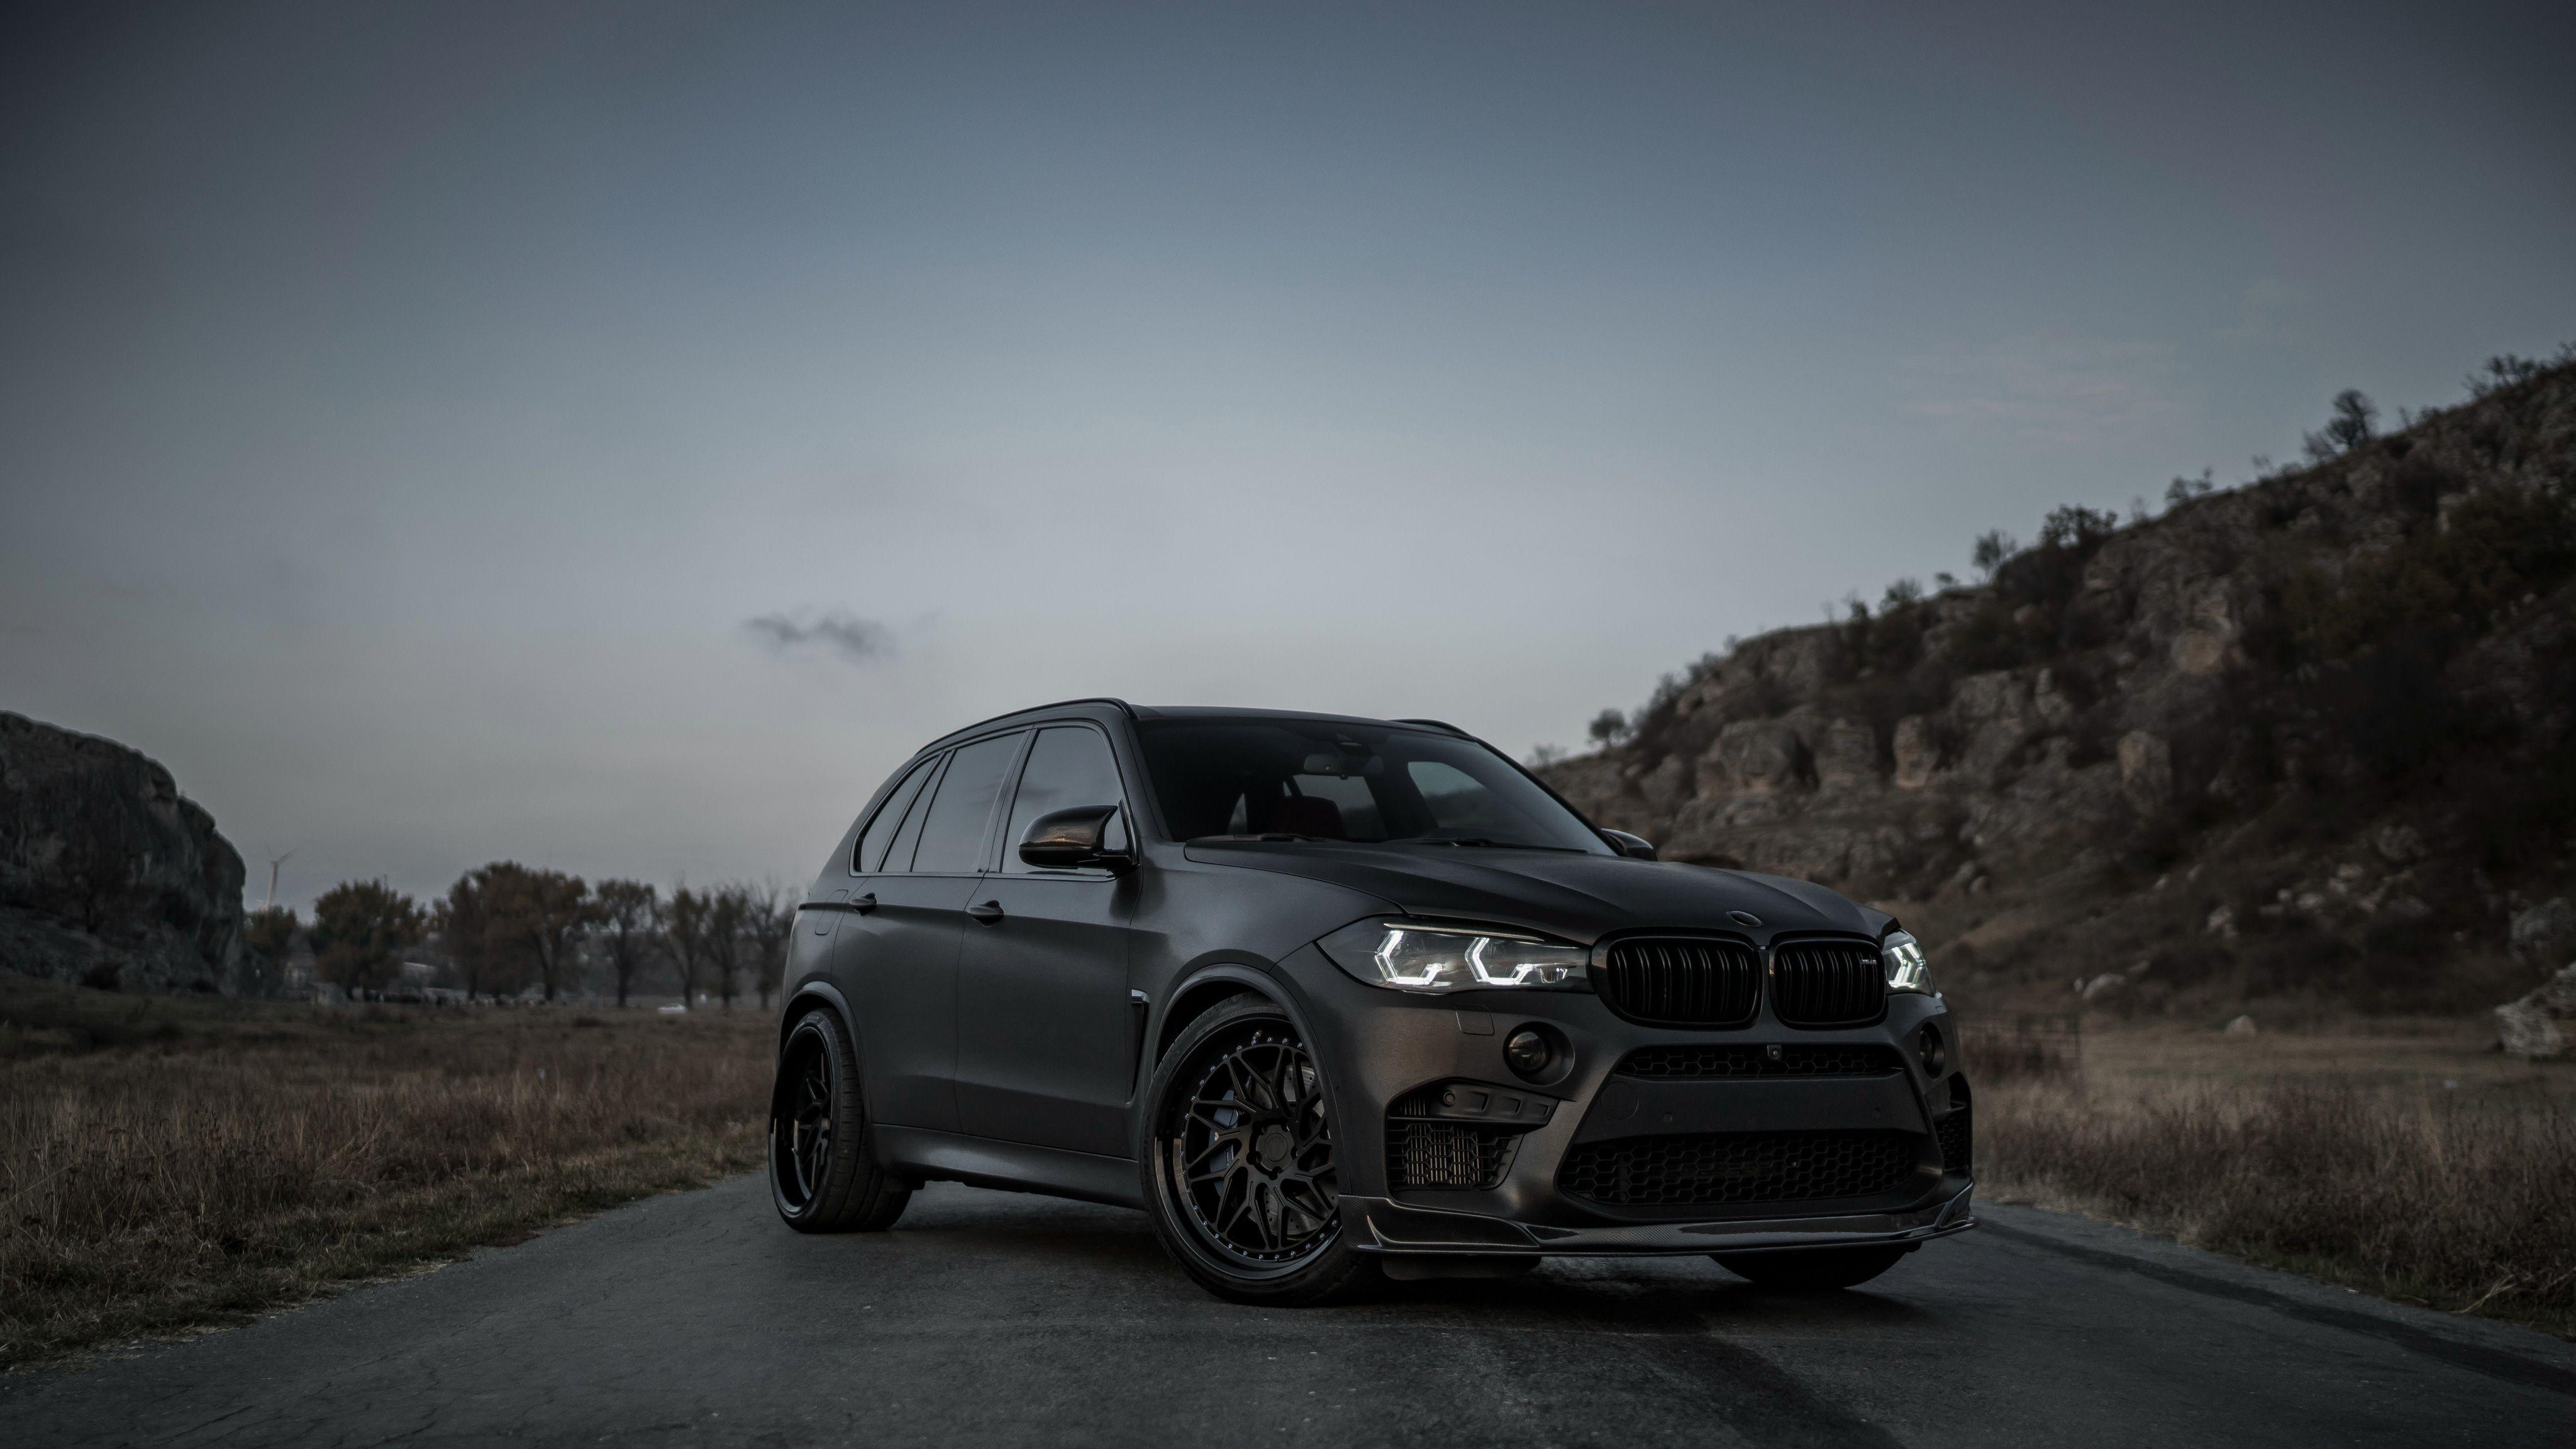 Z Performance BMW X5 2018 4k, HD Cars, 4k Wallpapers, Image